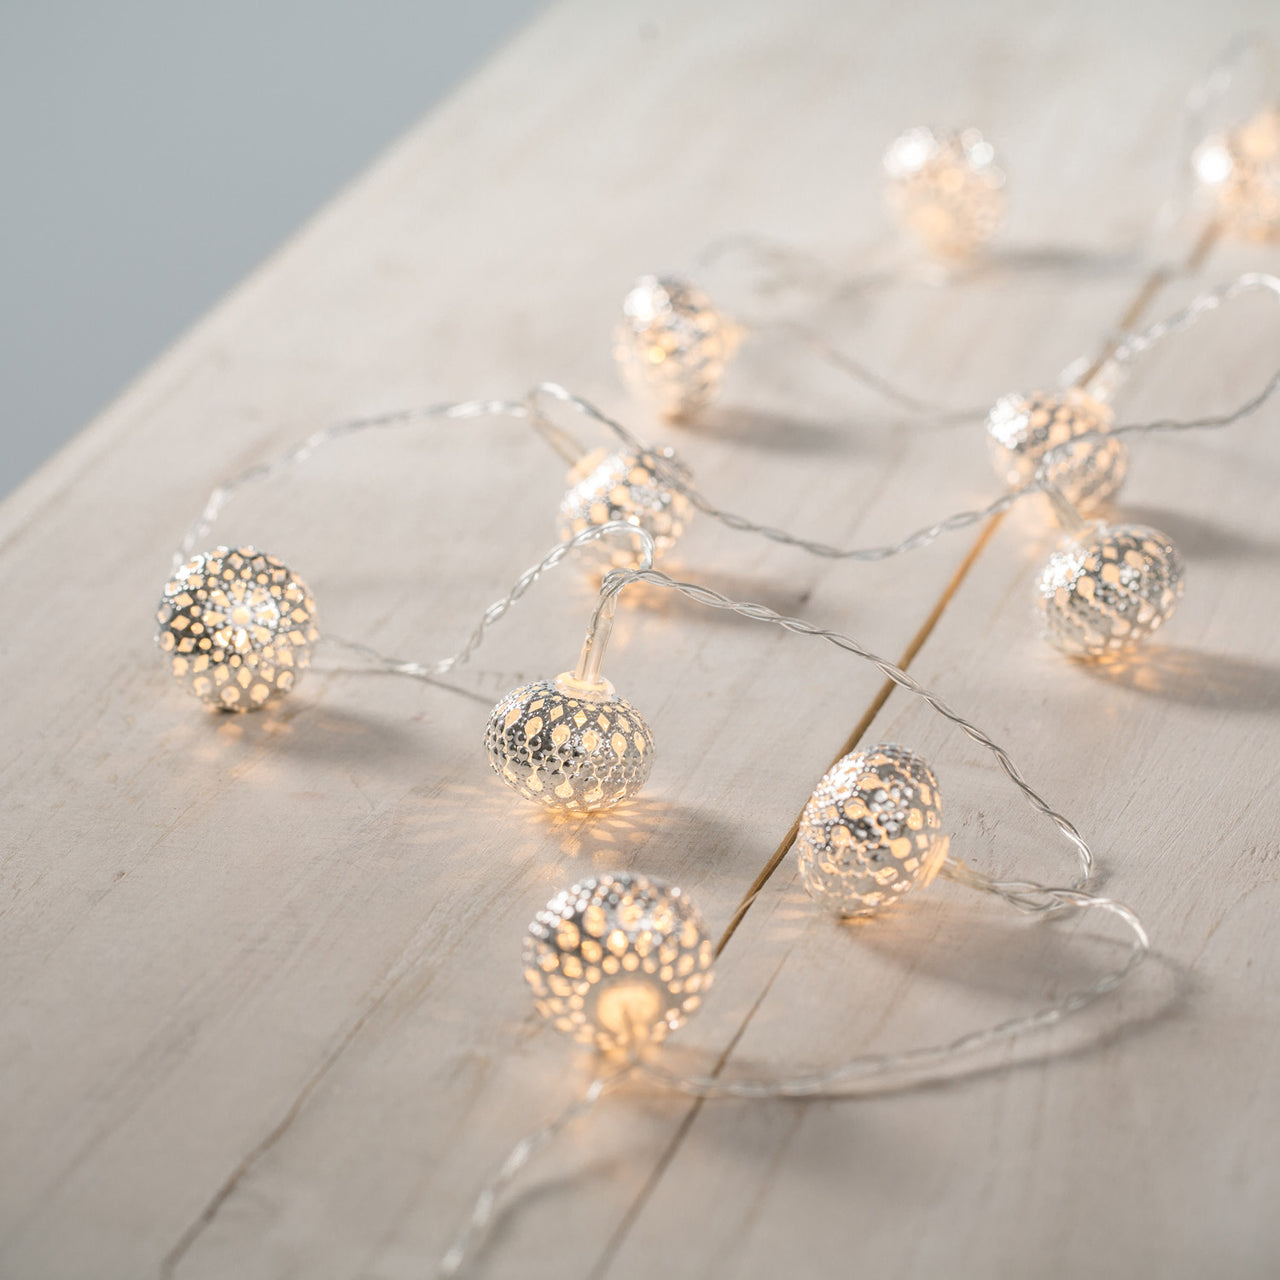 Guirlande Lumineuse LED 10 Mini Boules Marocaines à Piles –